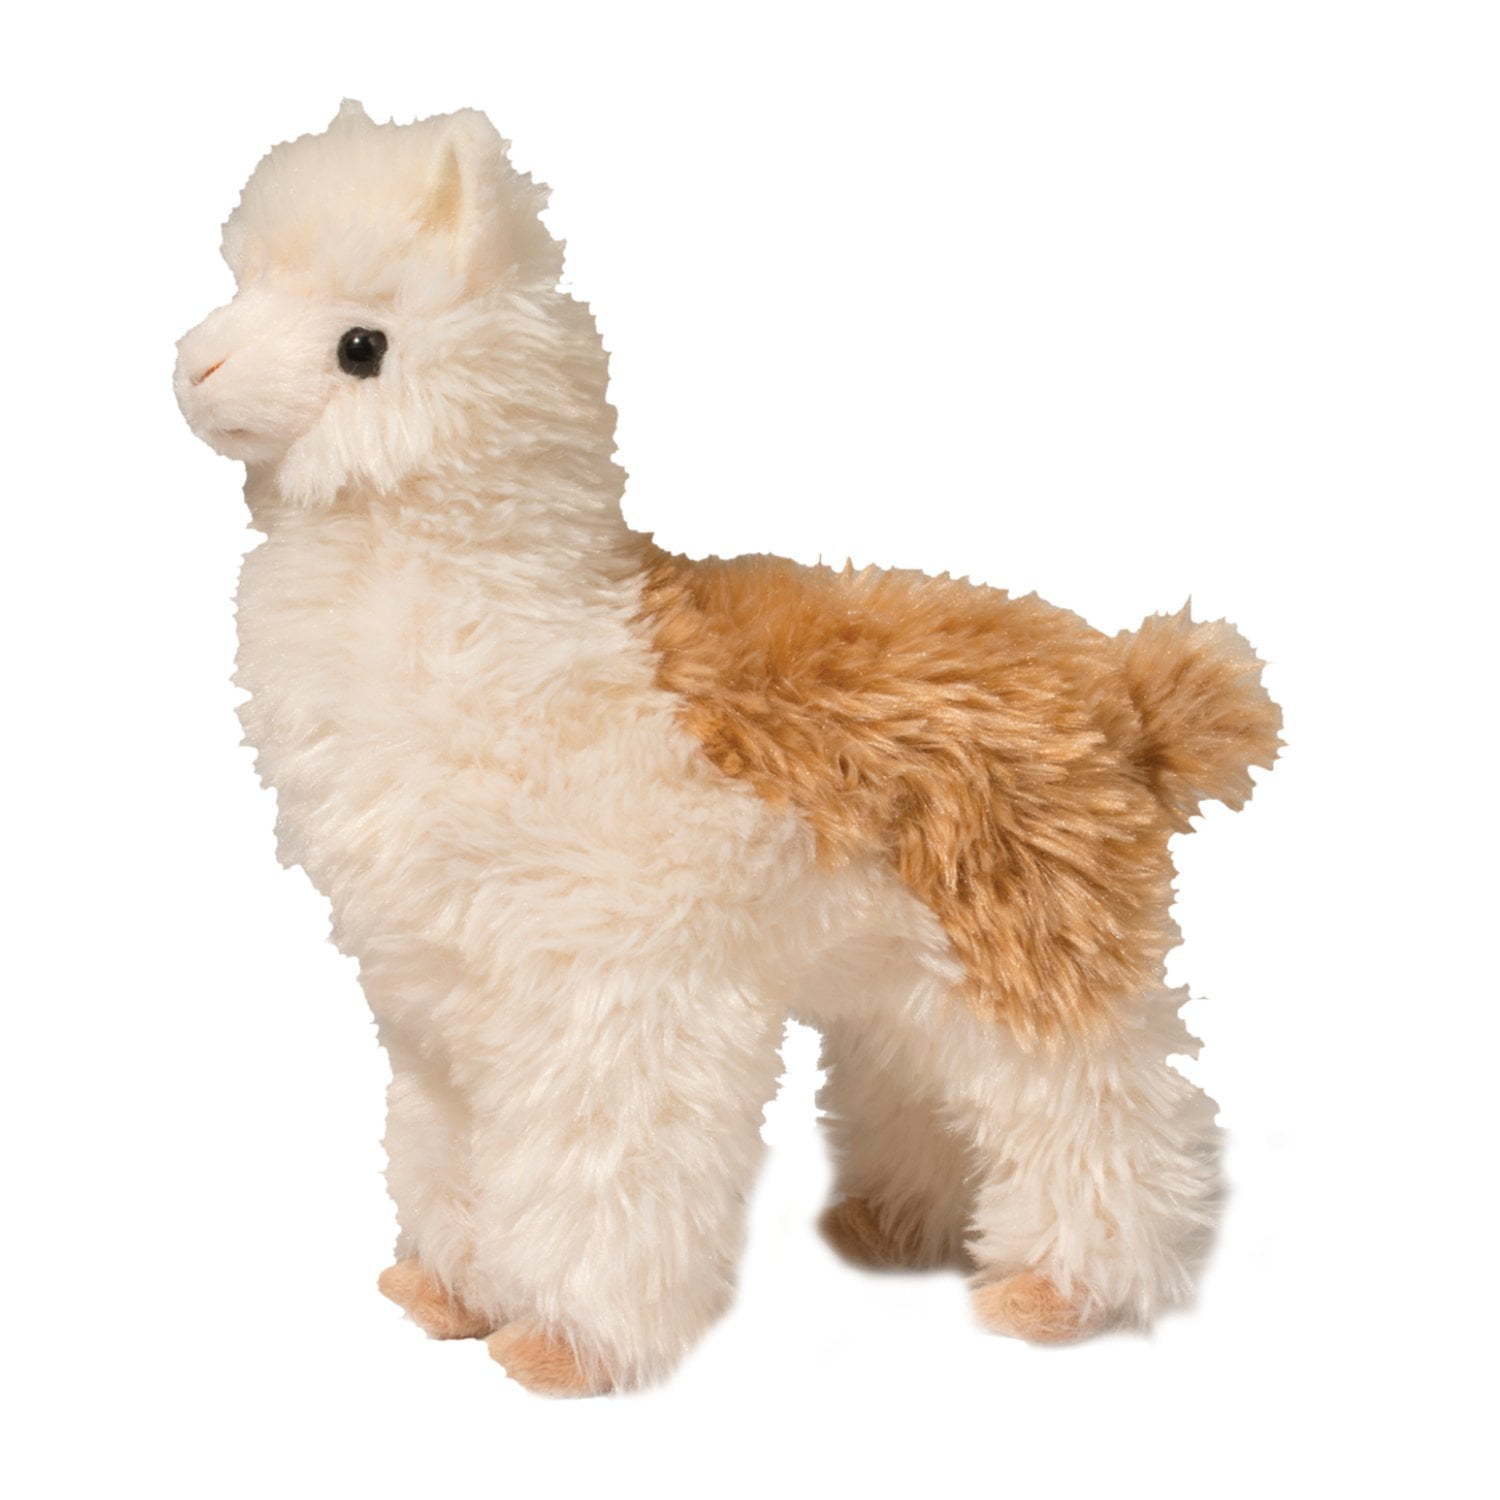 Gray Soft Stuffed Animal Plush 2018 for sale online Miyoni by Aurora World 12" Alpaca Grey 